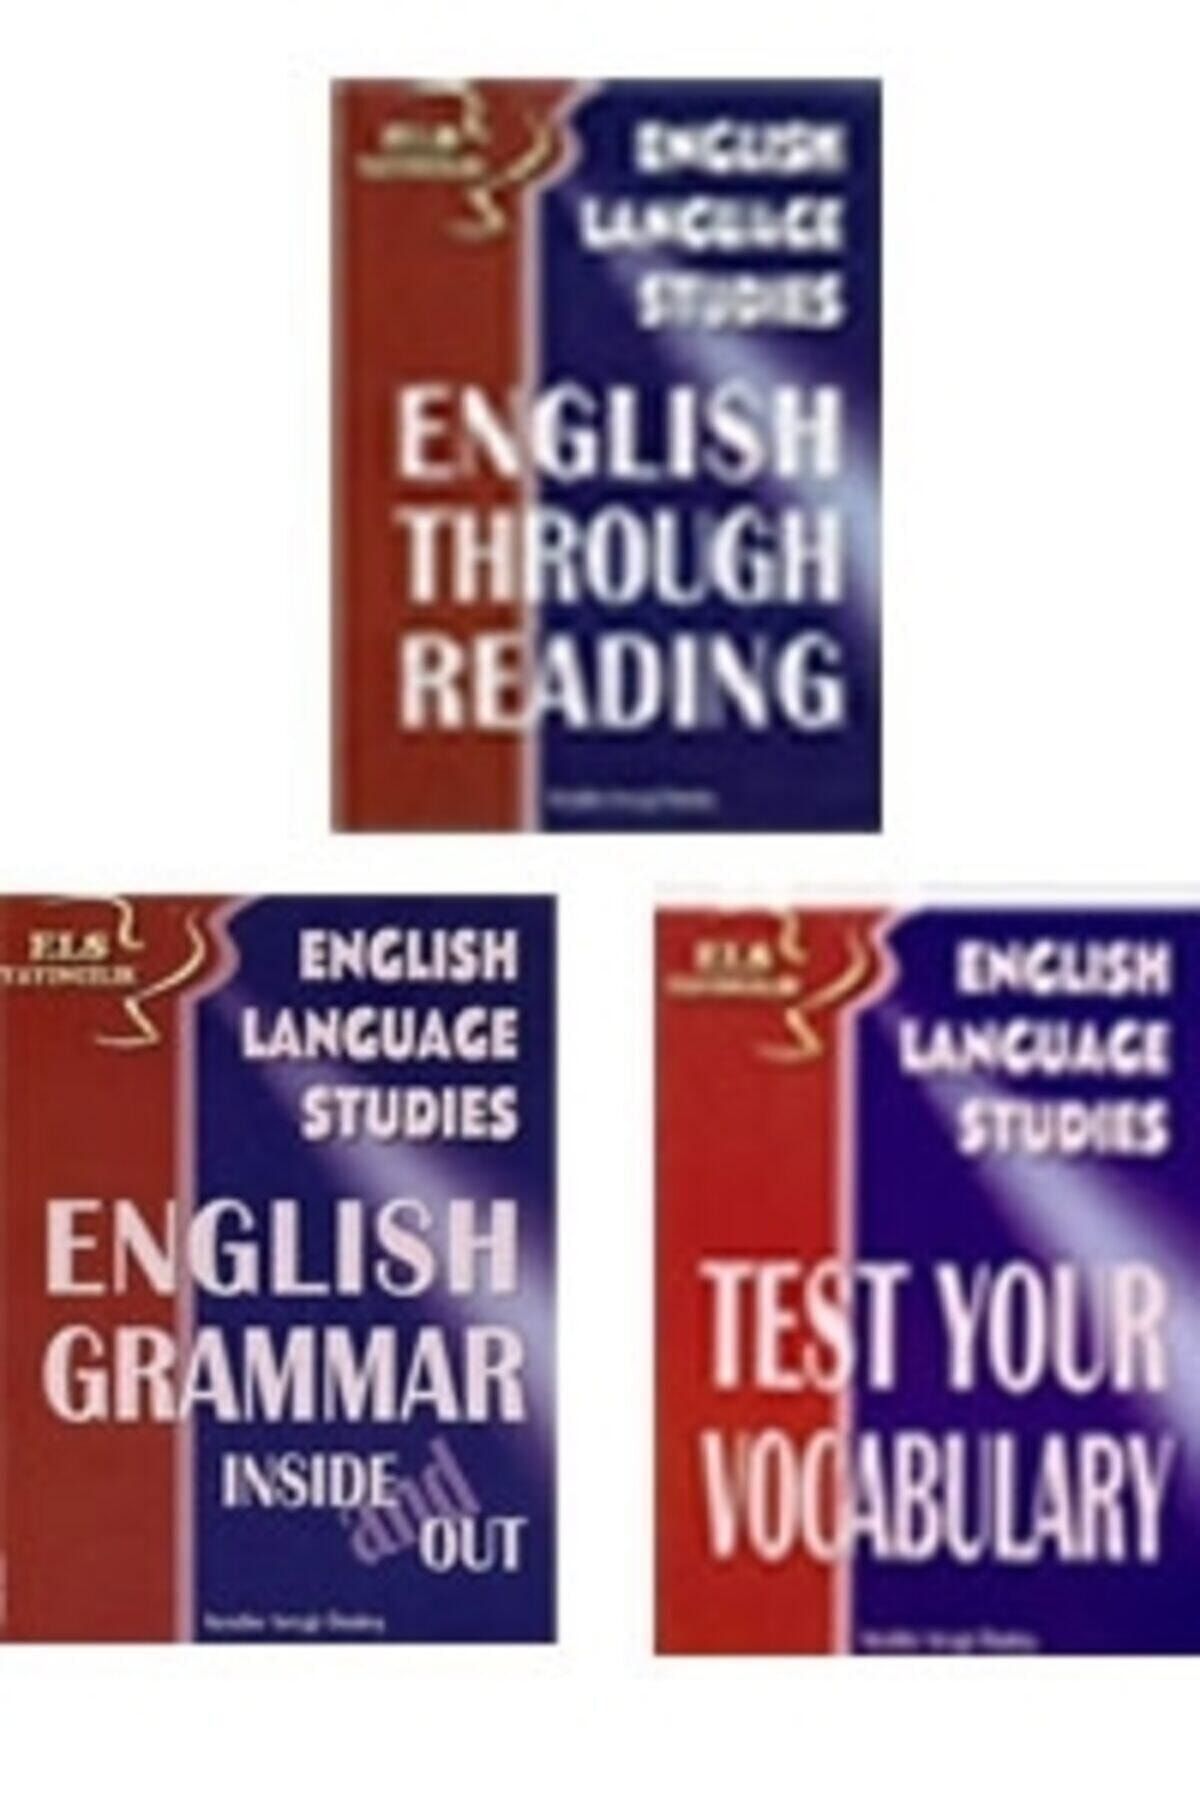 Els Yayıncılık Els English Grammar Inside And Out + English Through Reading + Test Your Vocabulary